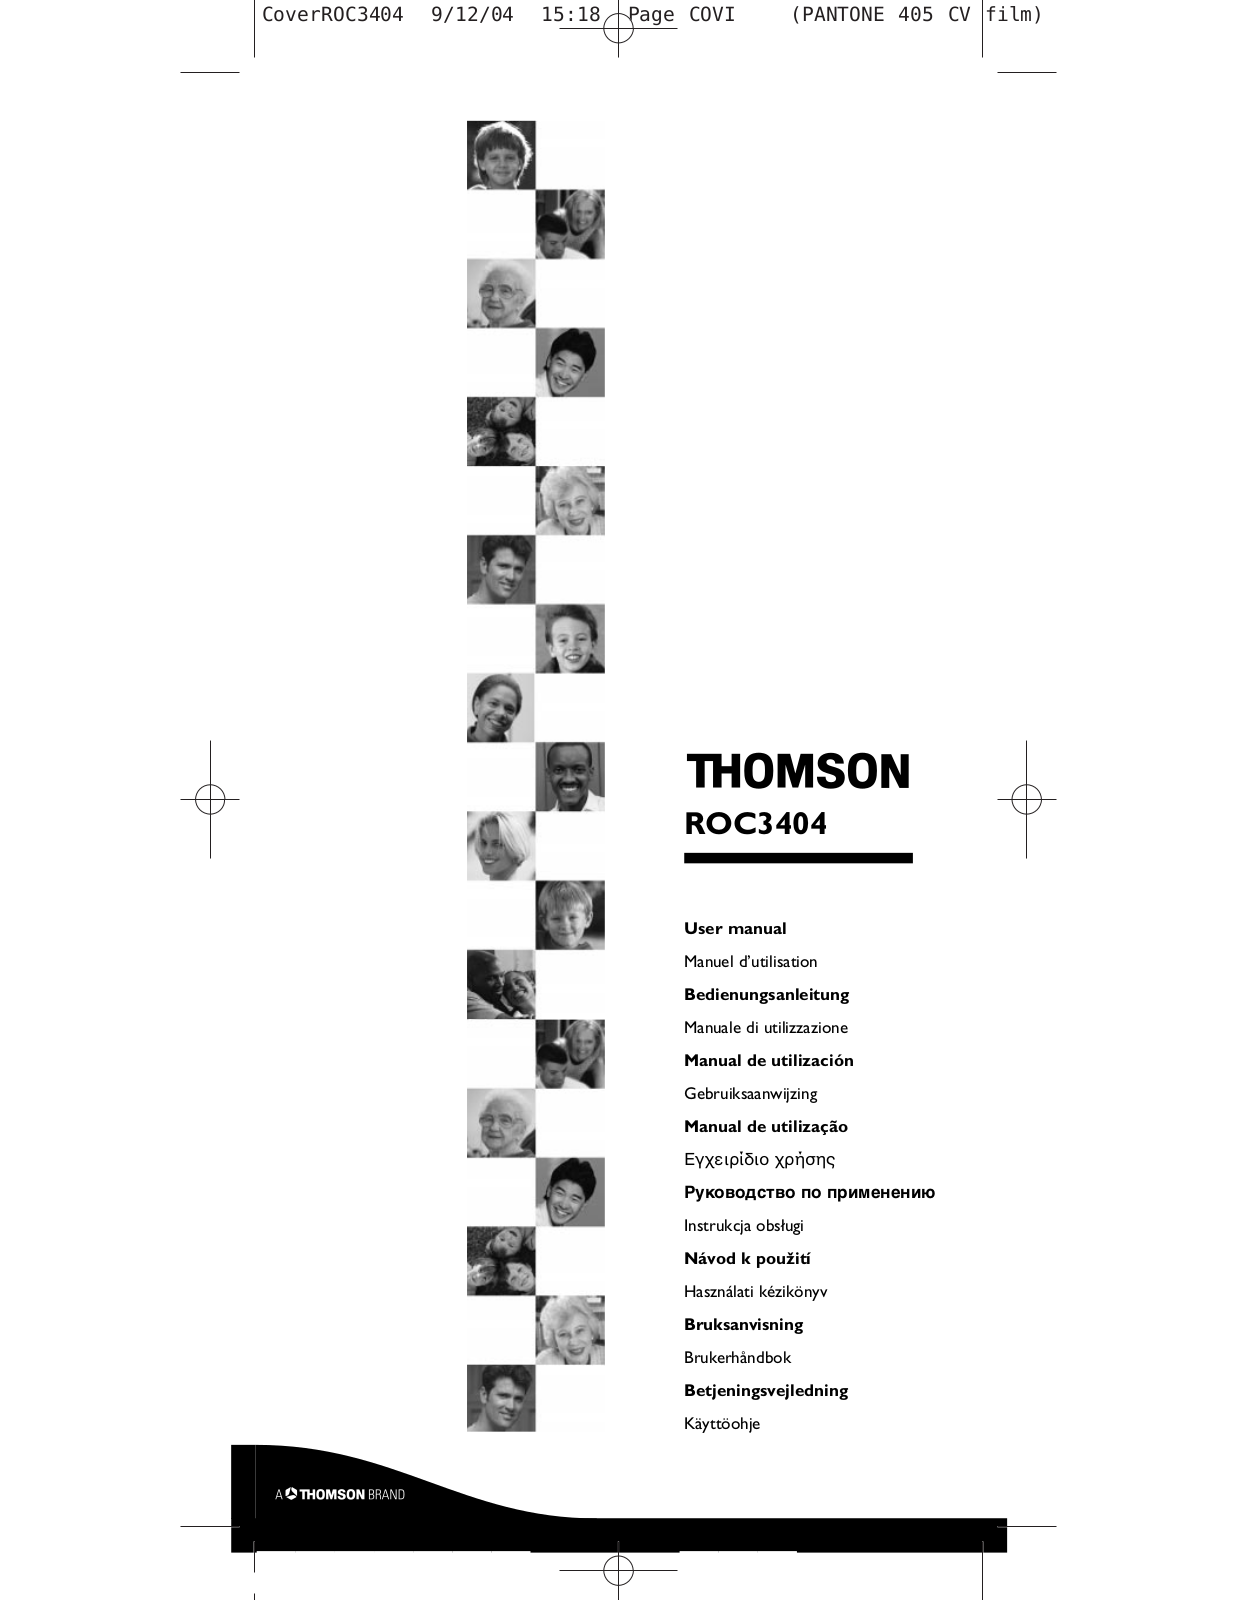 THOMSON ROC 3404 - CODE LIST User Manual